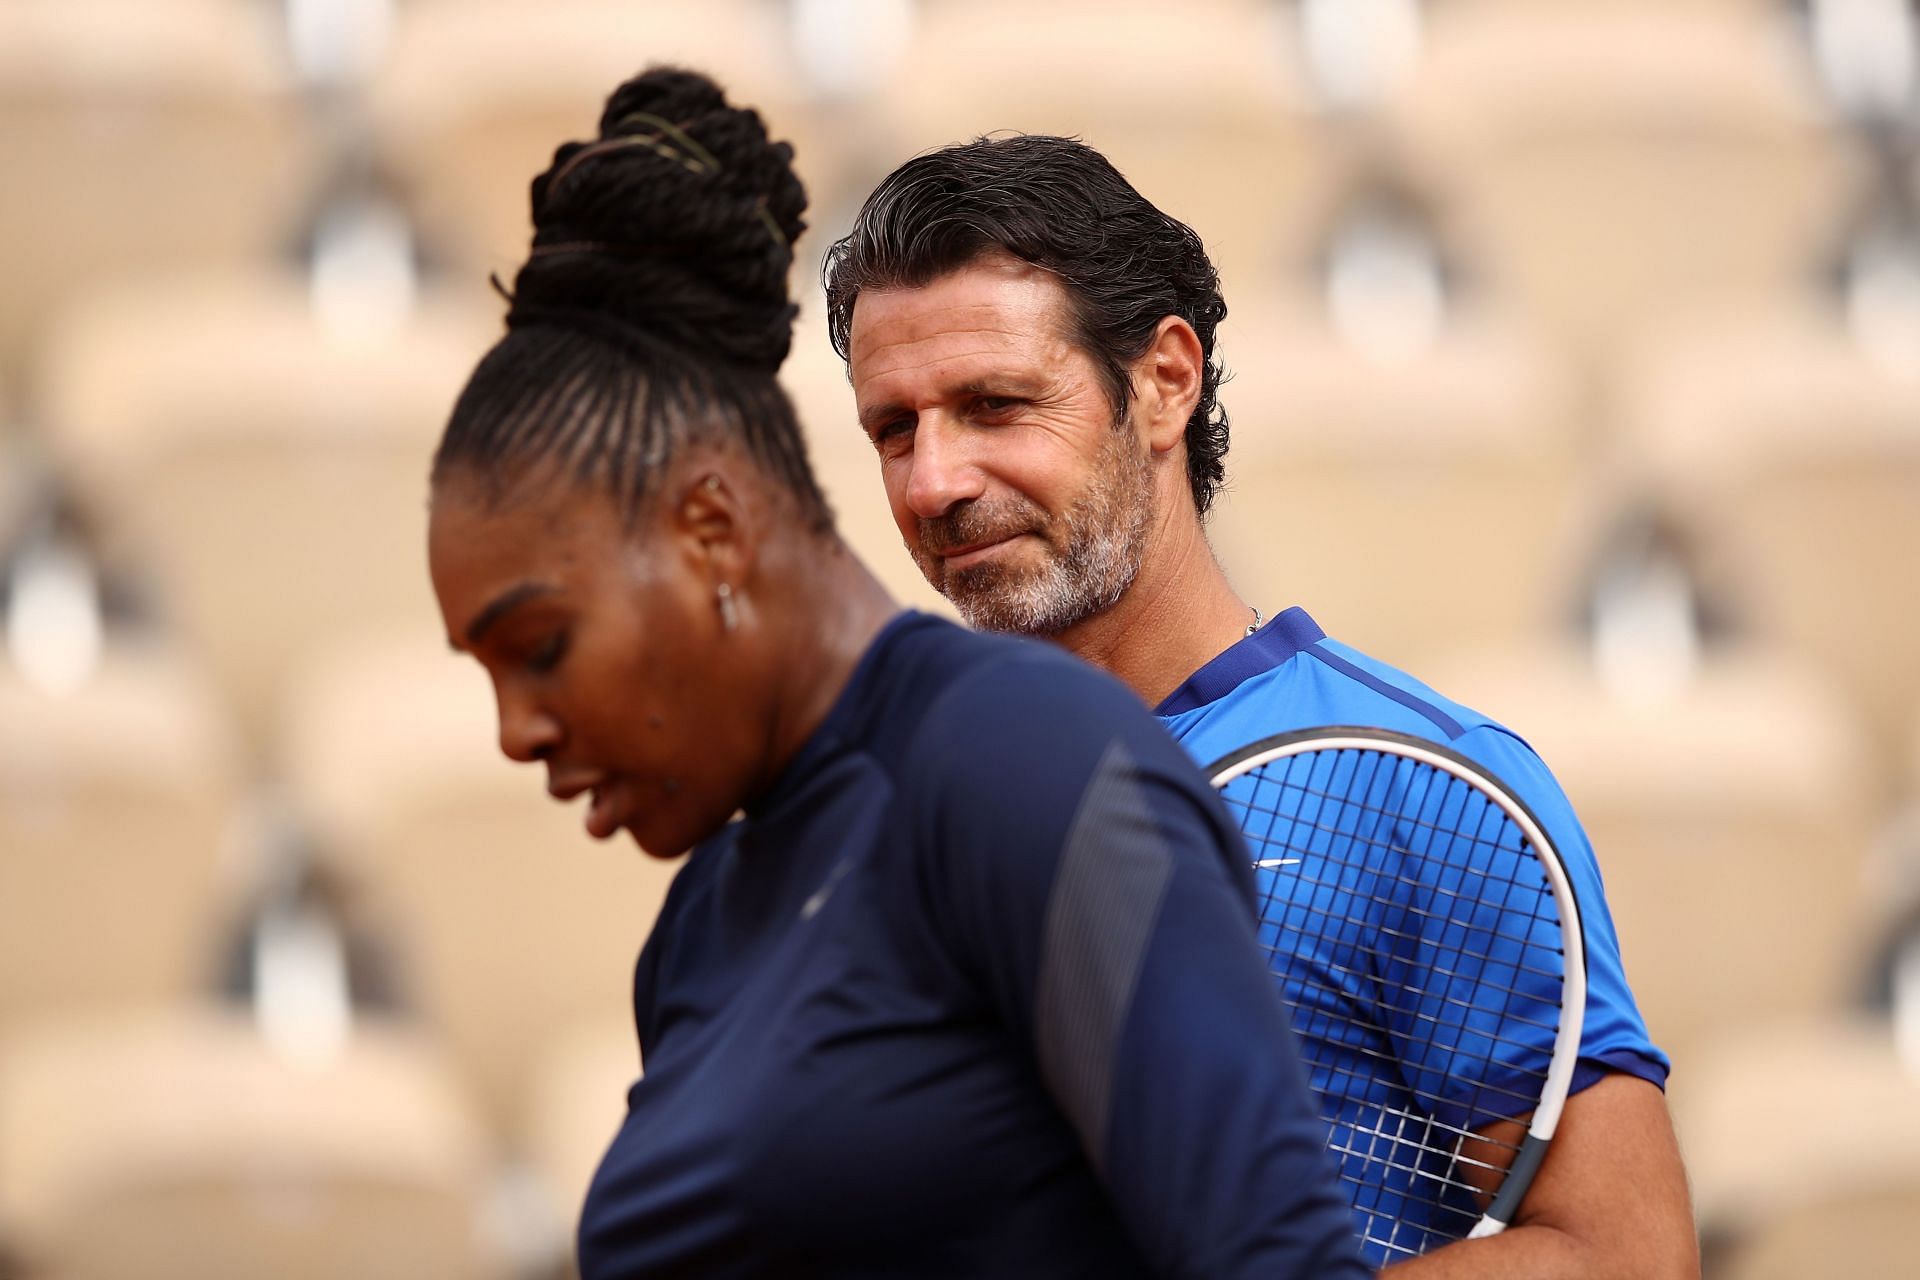 Serena Williams with Patrick Mouratoglou